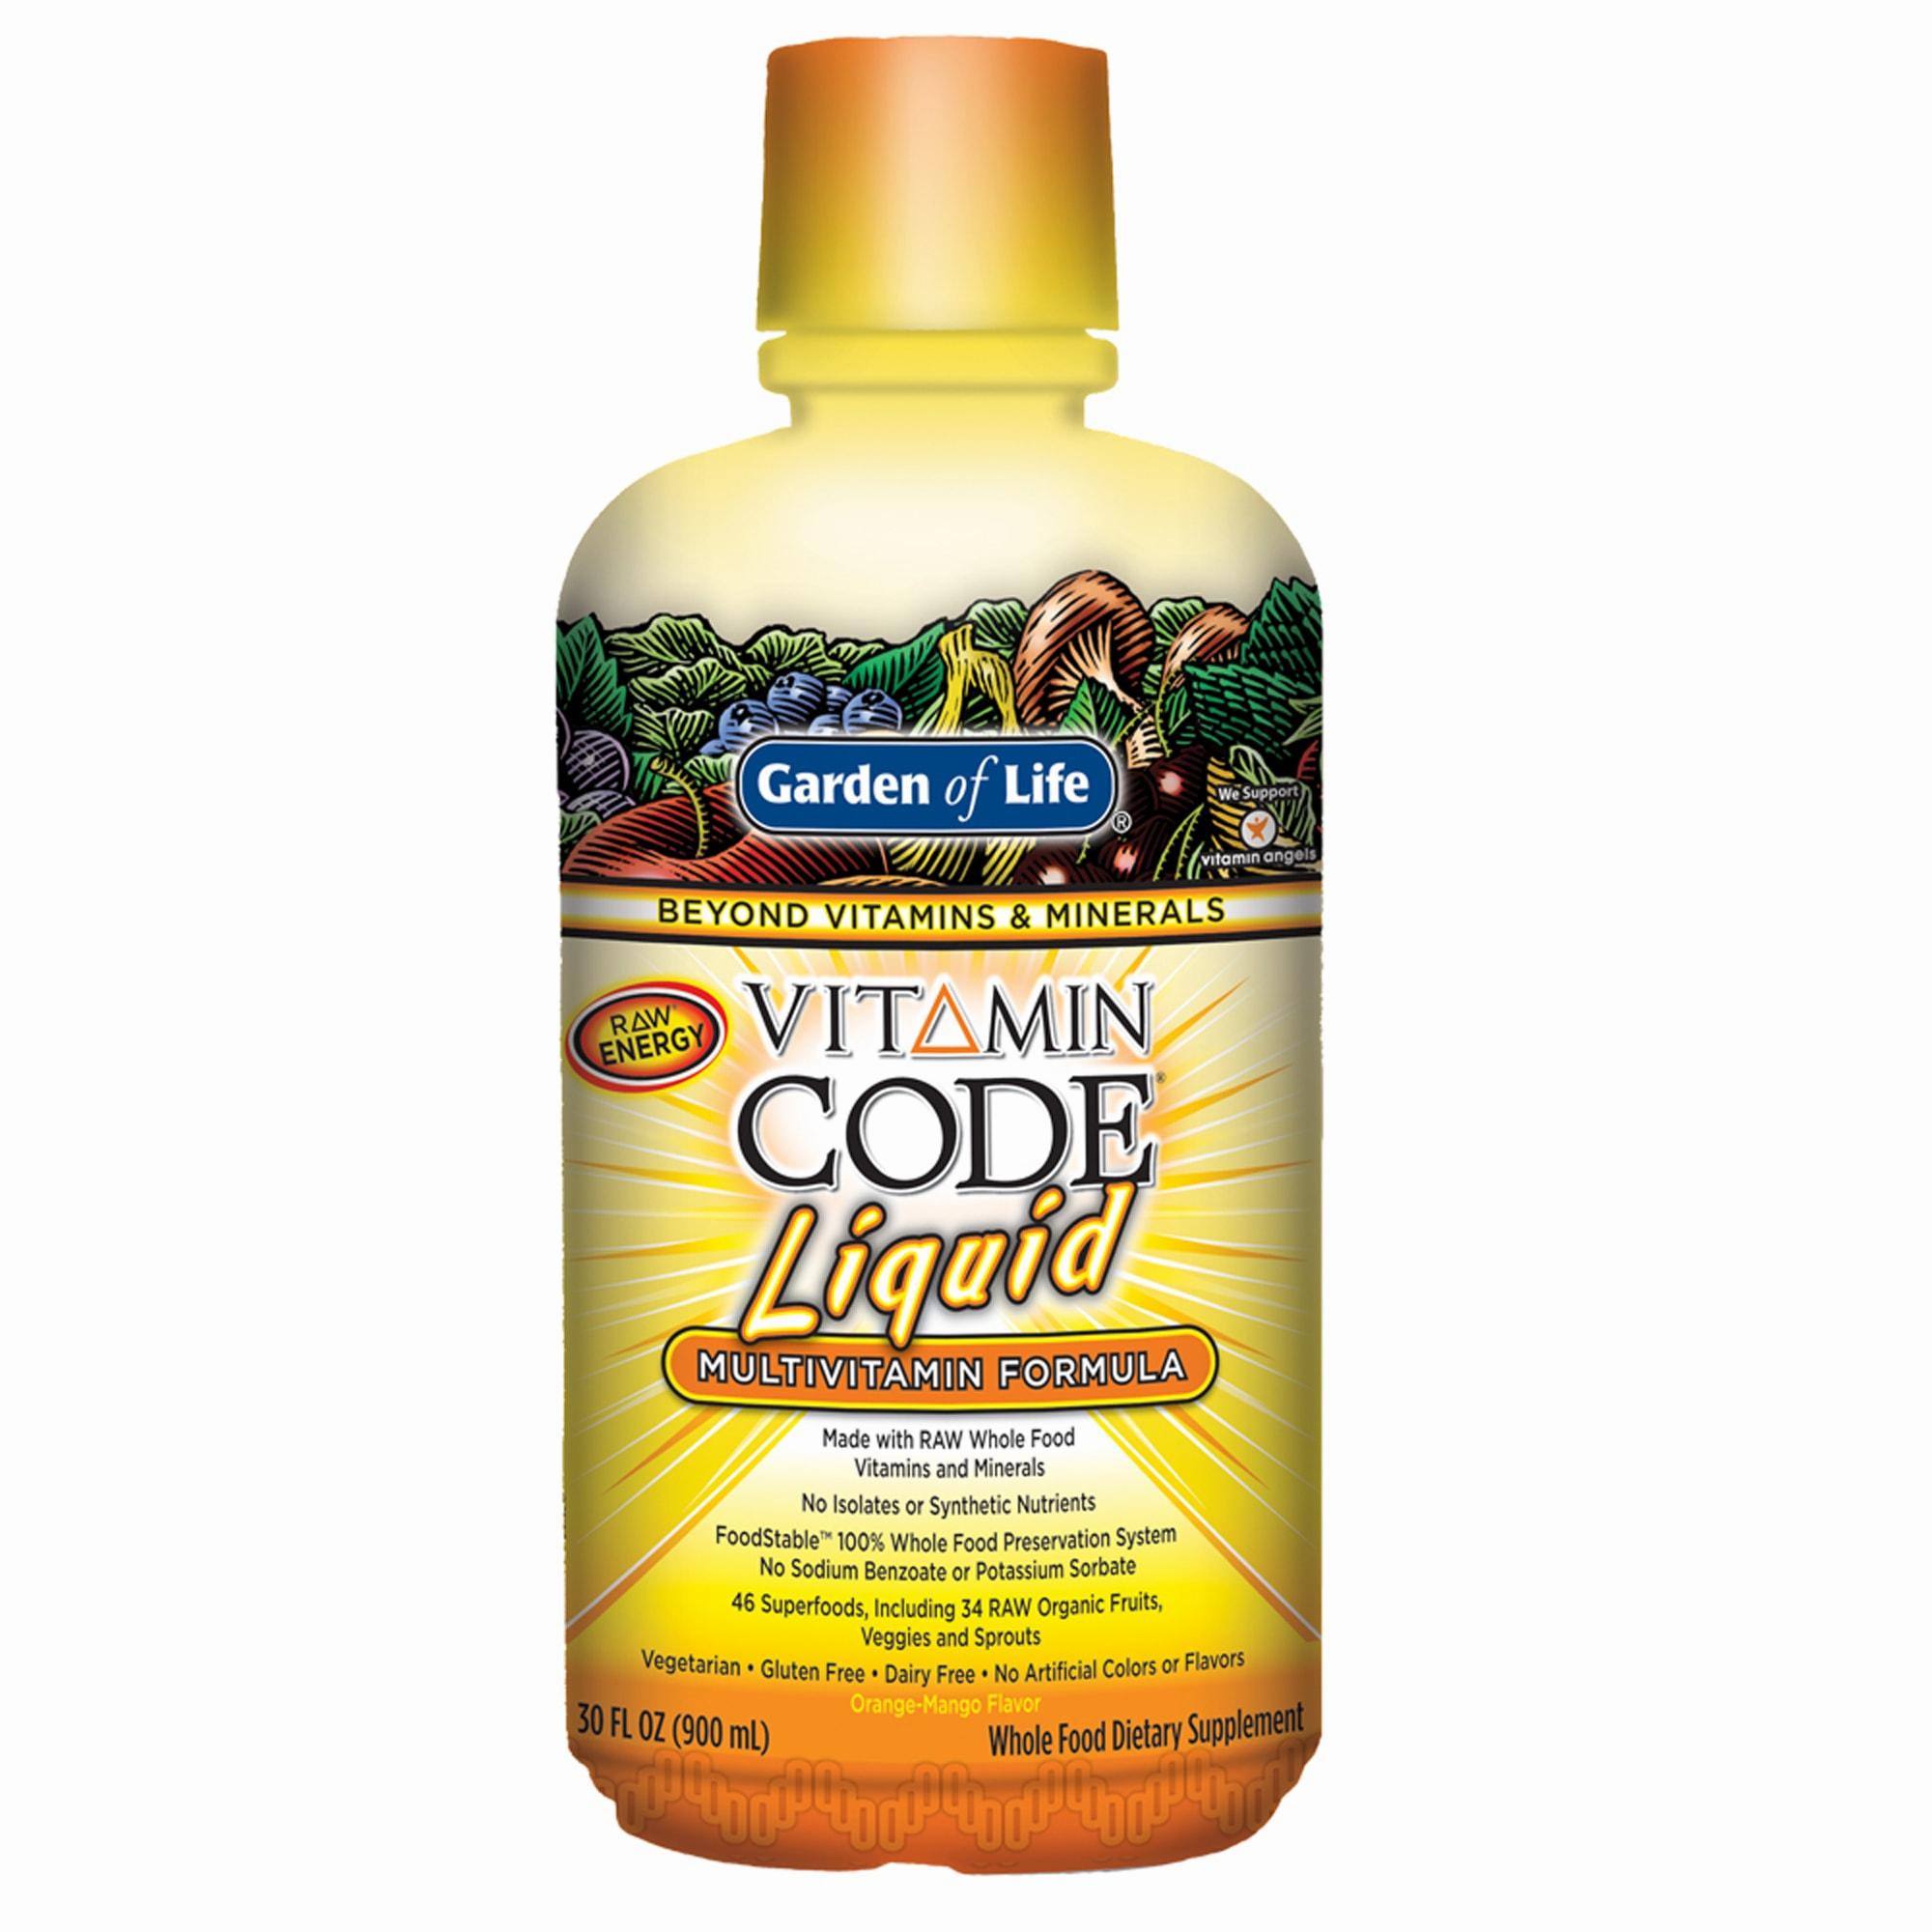 A bottle of Garden of Life Vitamin Code Liquid multivitamin in orange-mango flavor.